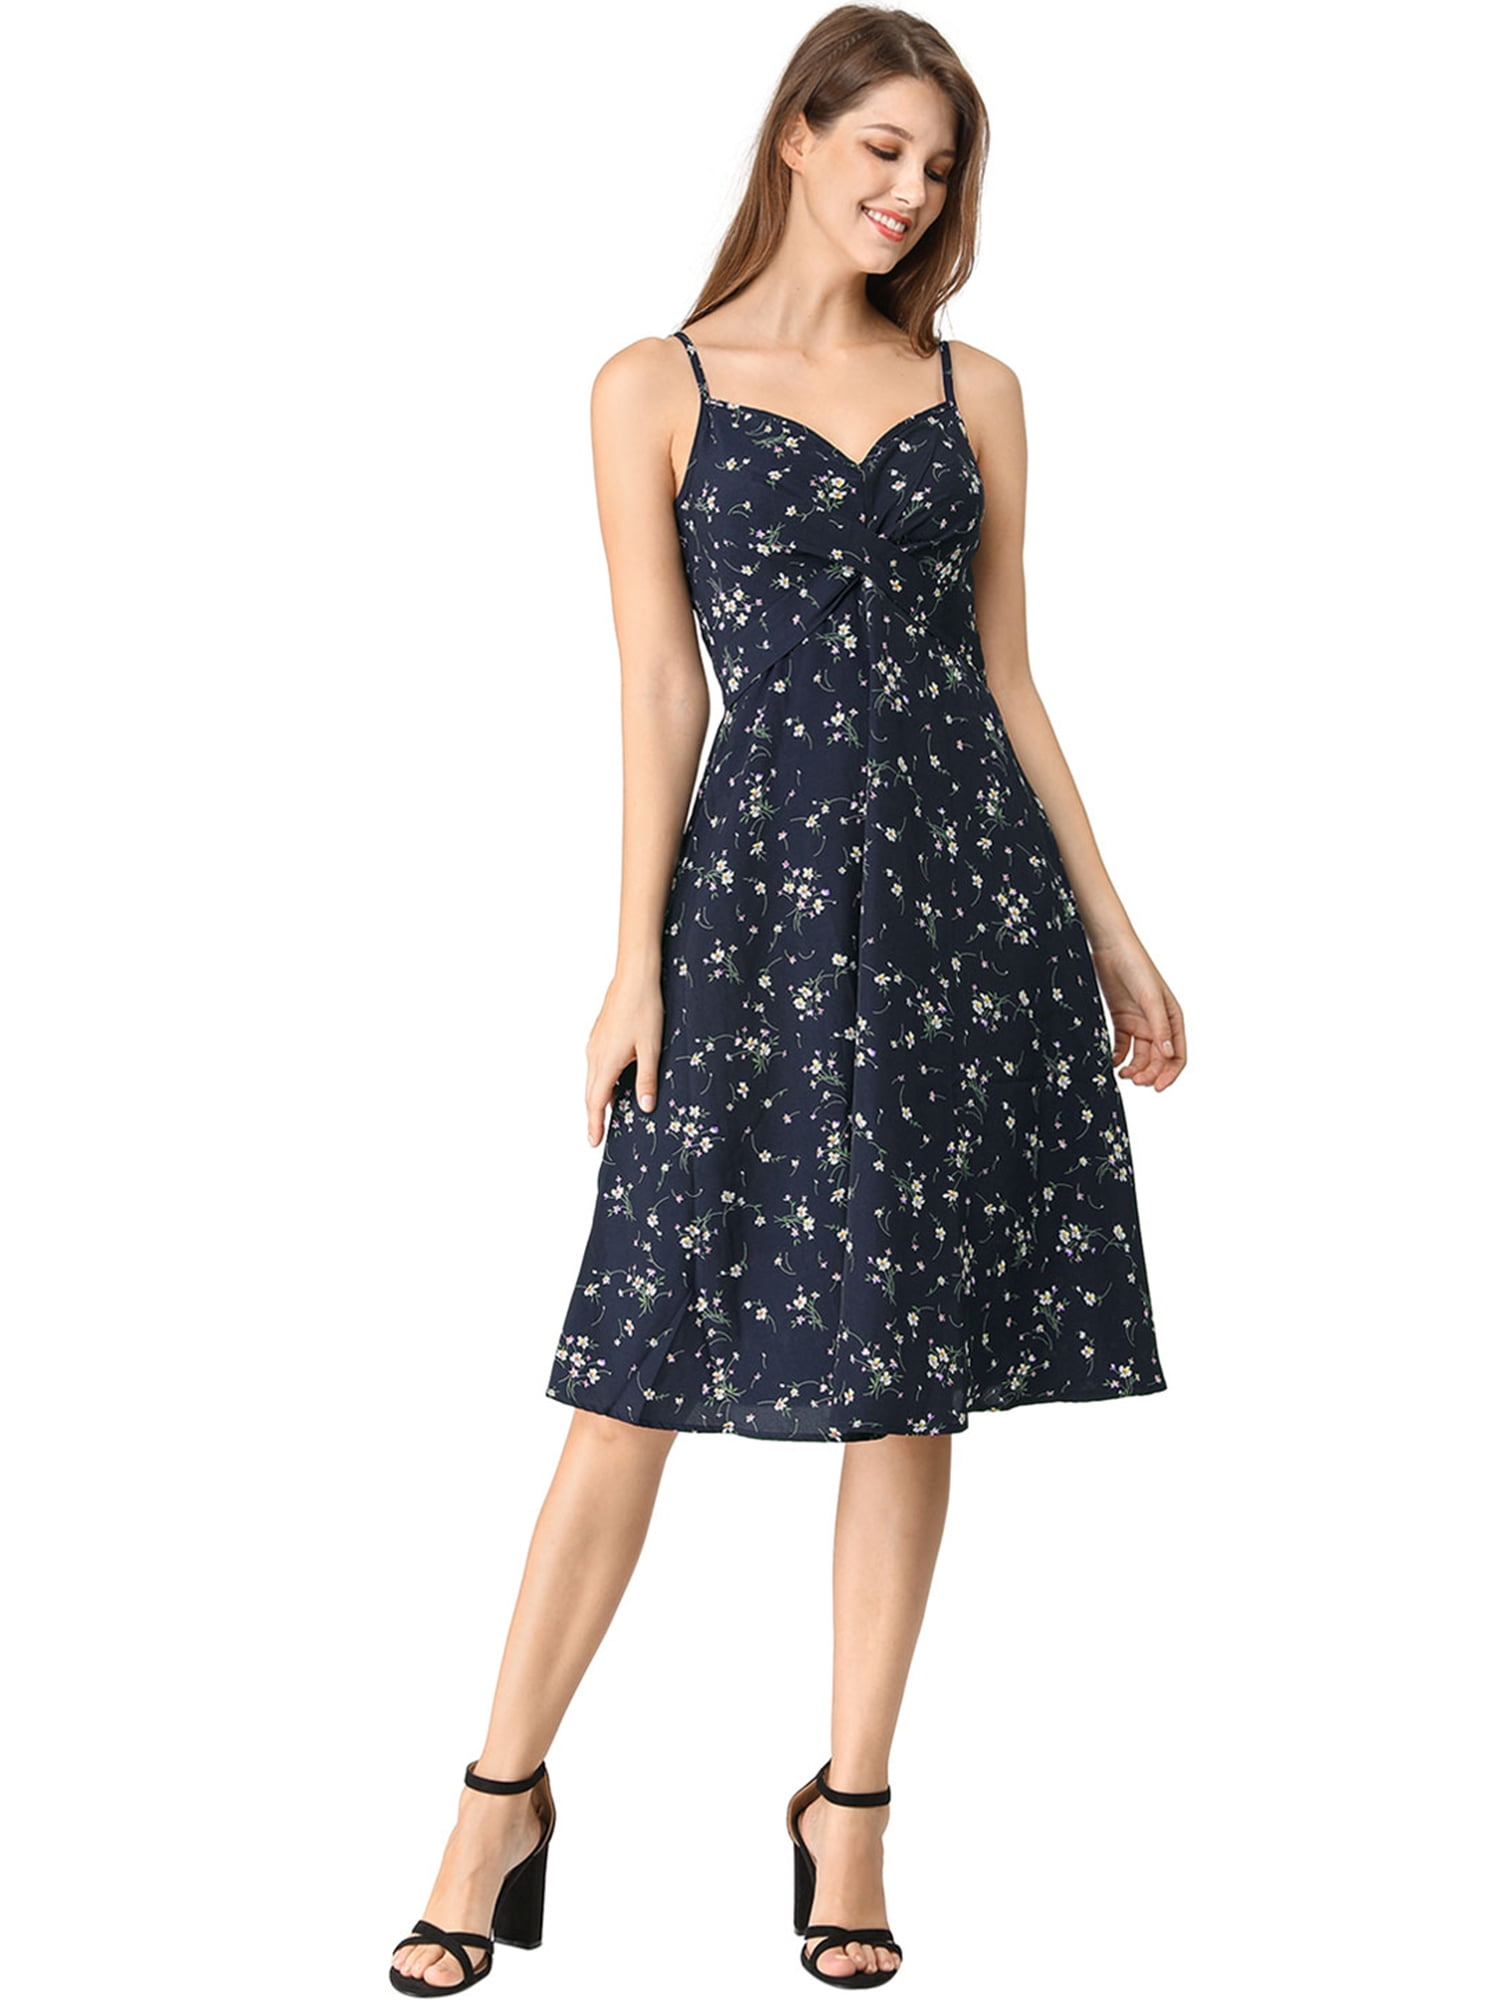 Knee High Summer Dresses on Sale, UP TO 64% OFF | www.editorialelpirata.com